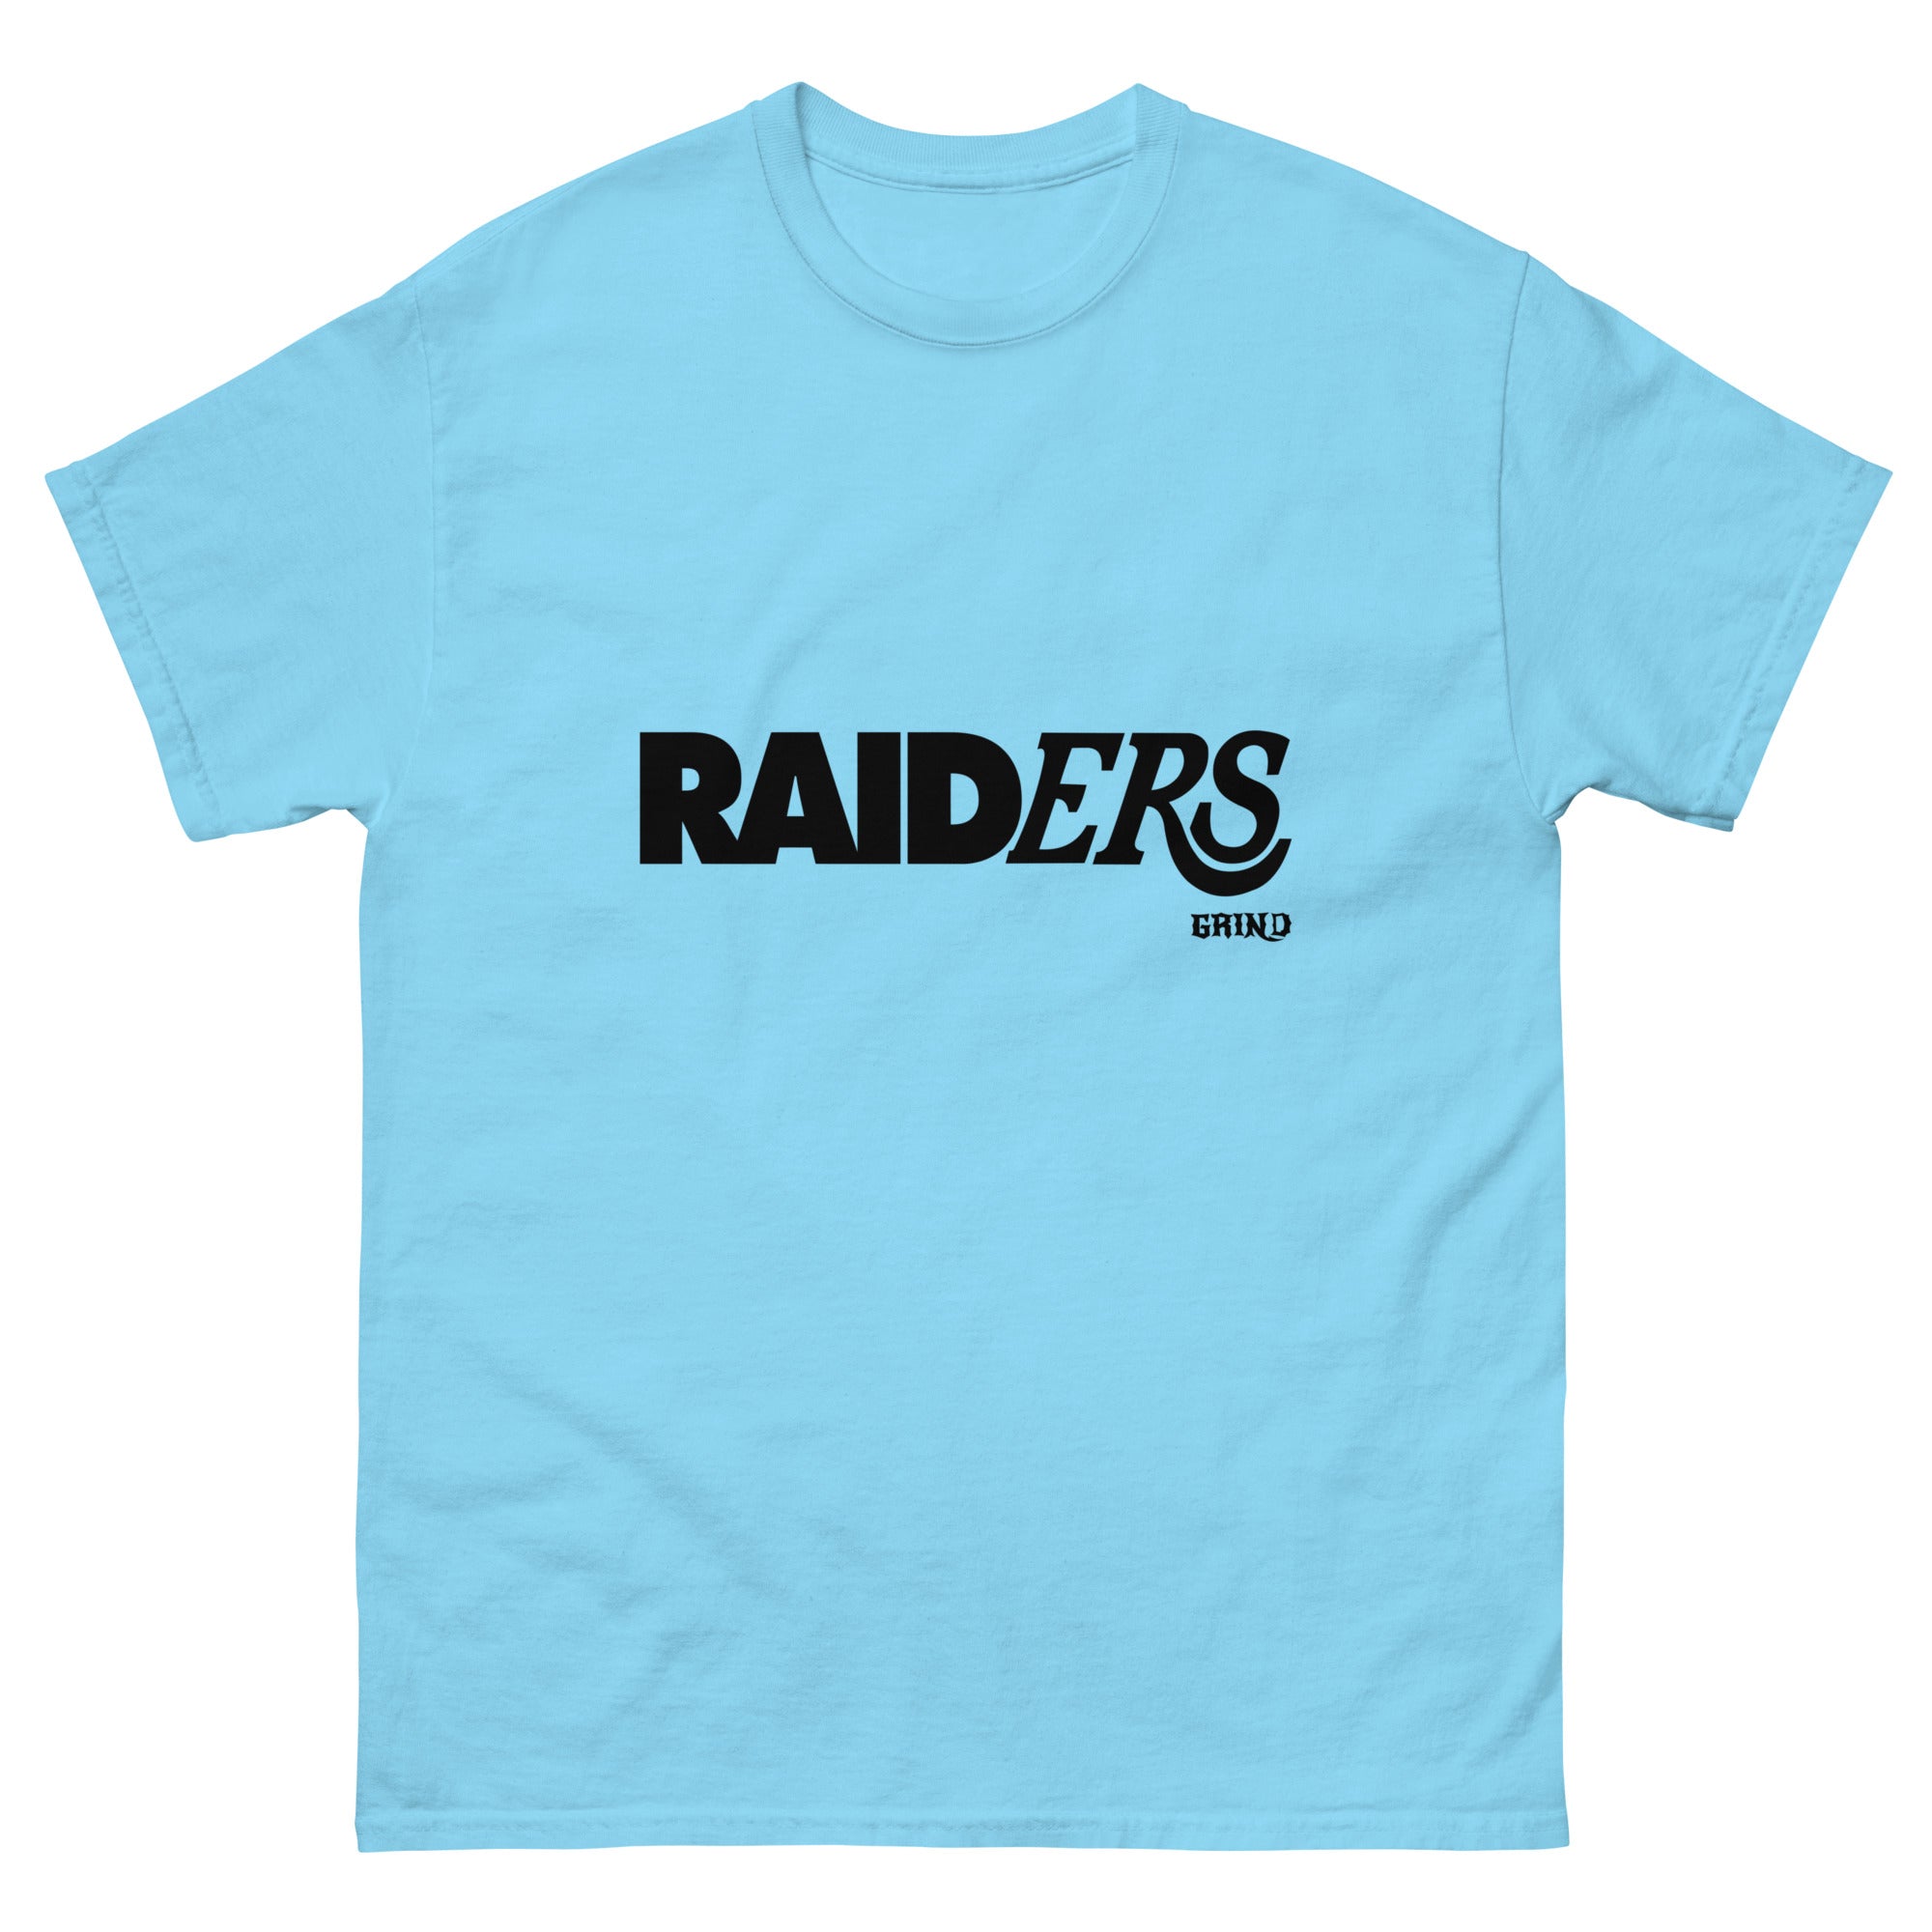 GRIND Raider Lakers Shirt (Light Colors)